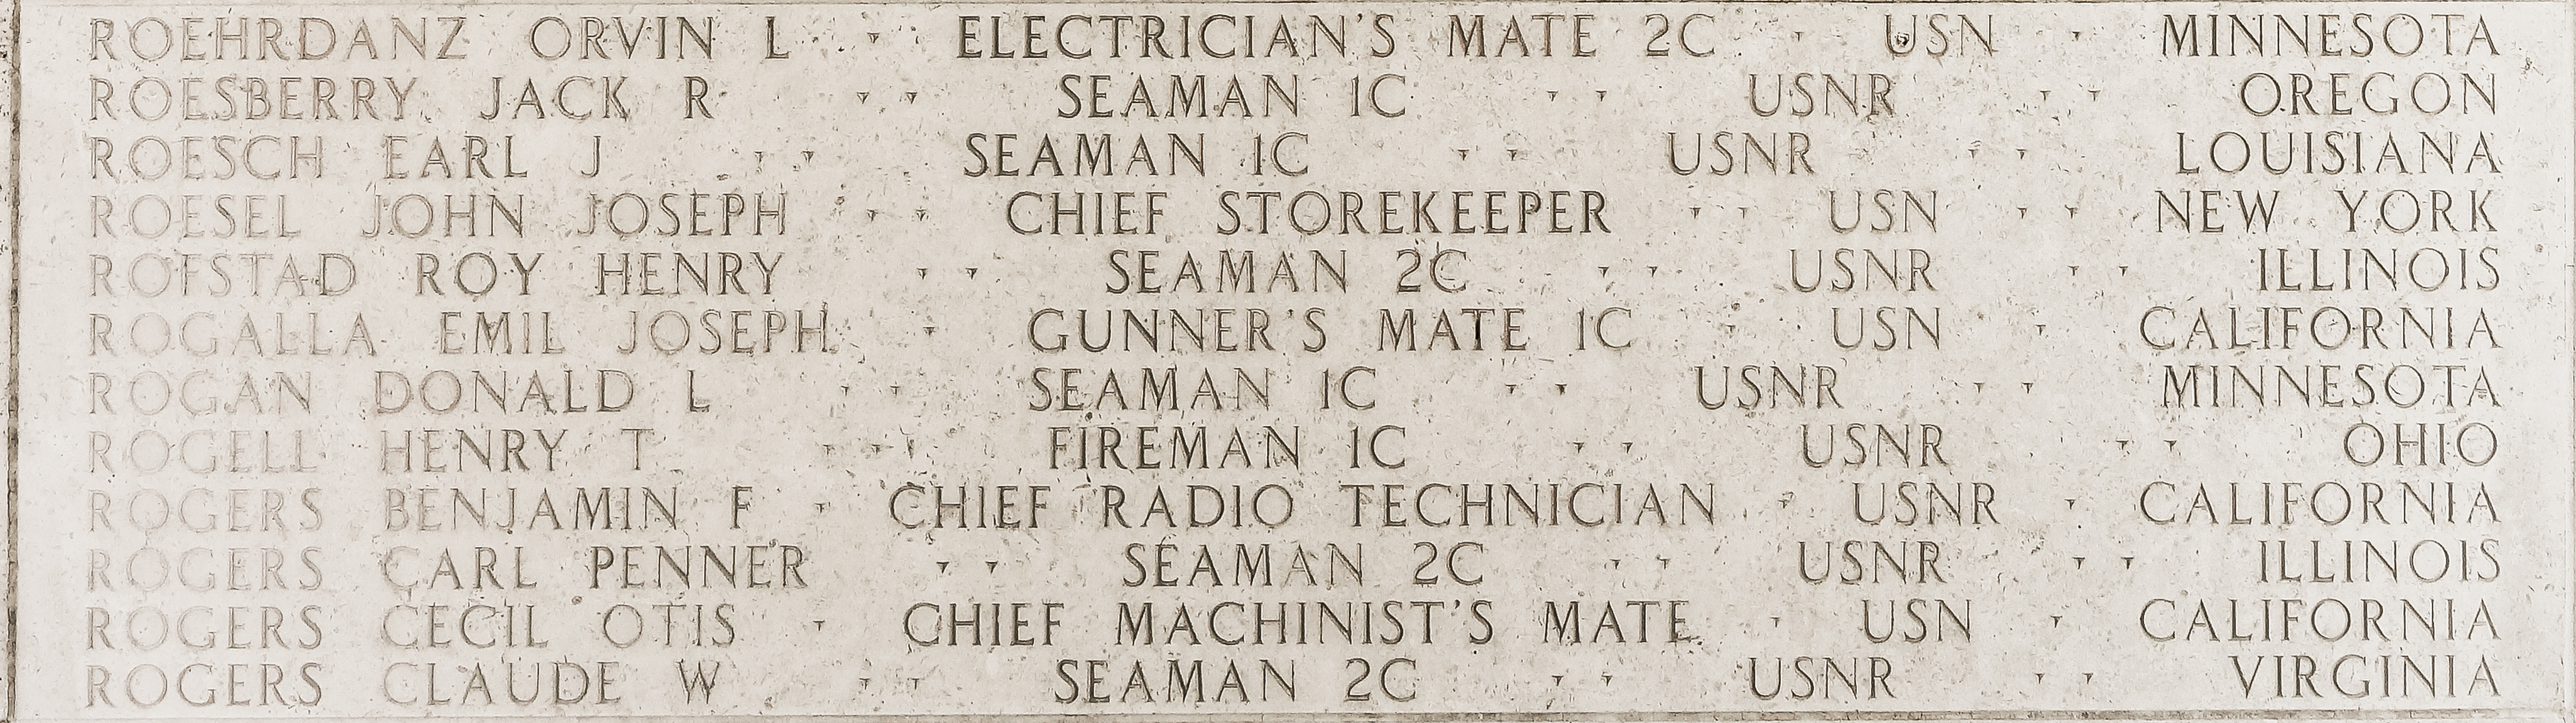 Benjamin F. Rogers, Chief Radio Technician